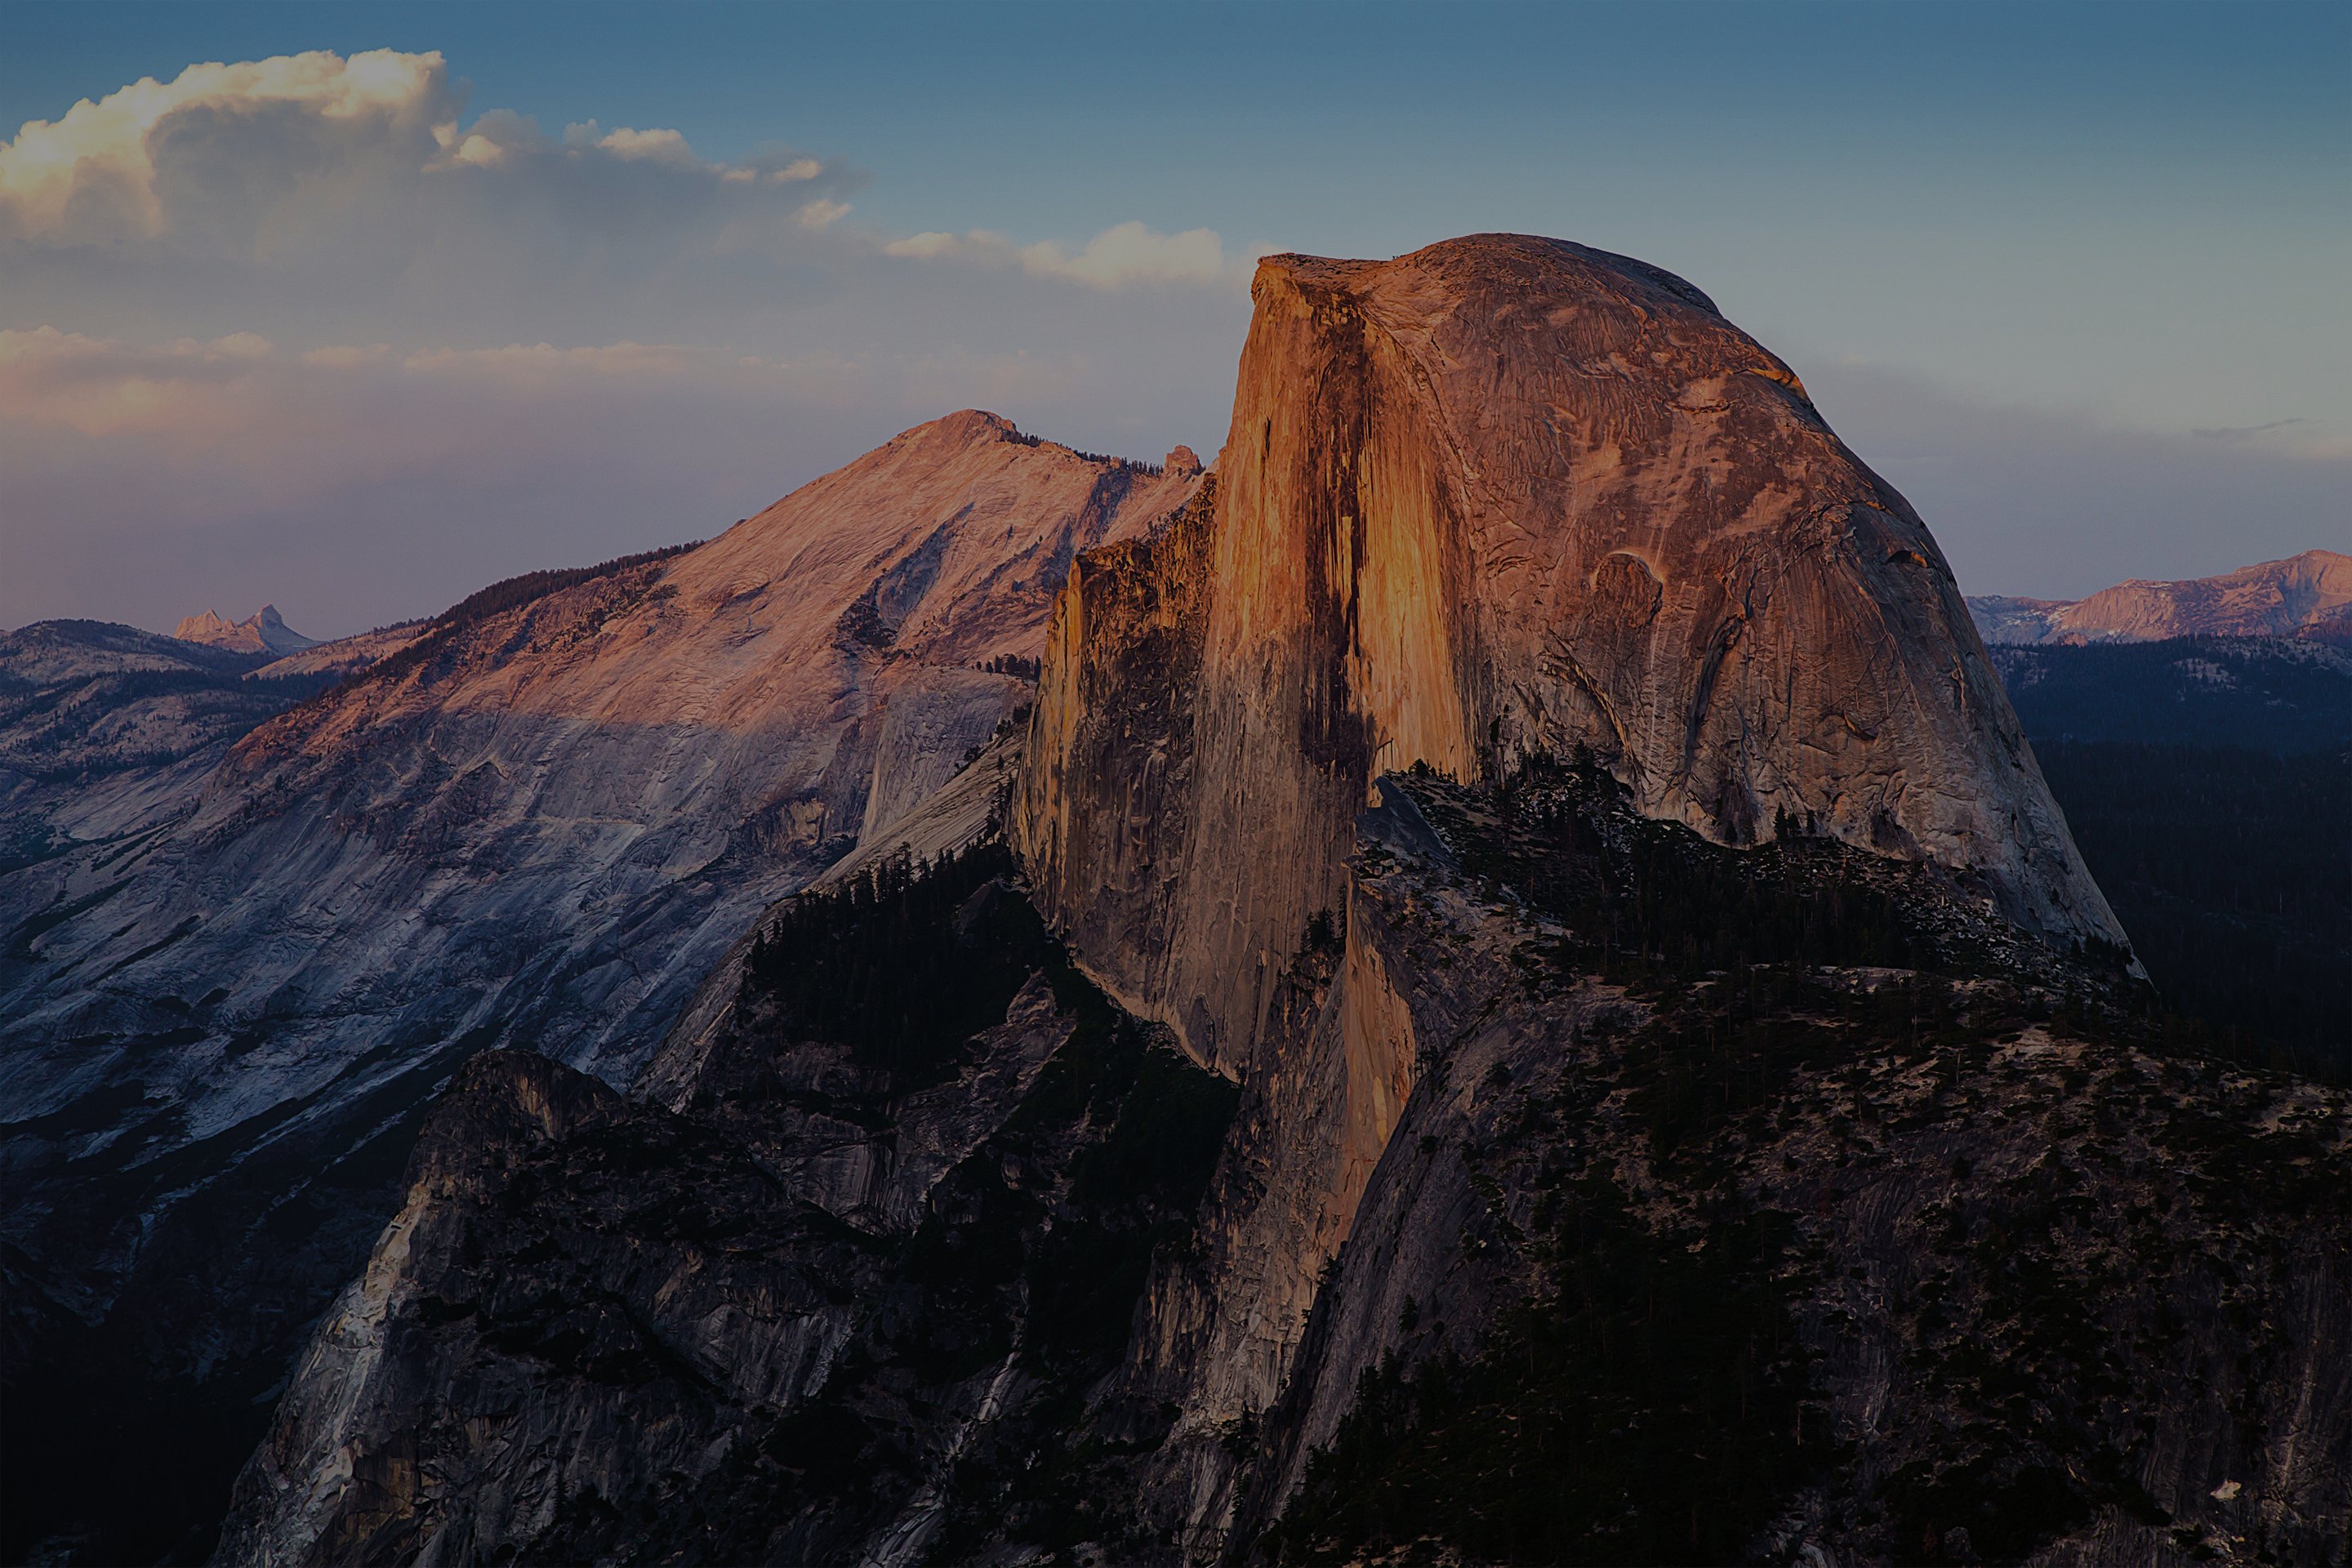 A vibrant sunset illuminates Half Dome in Yosemite National Park.